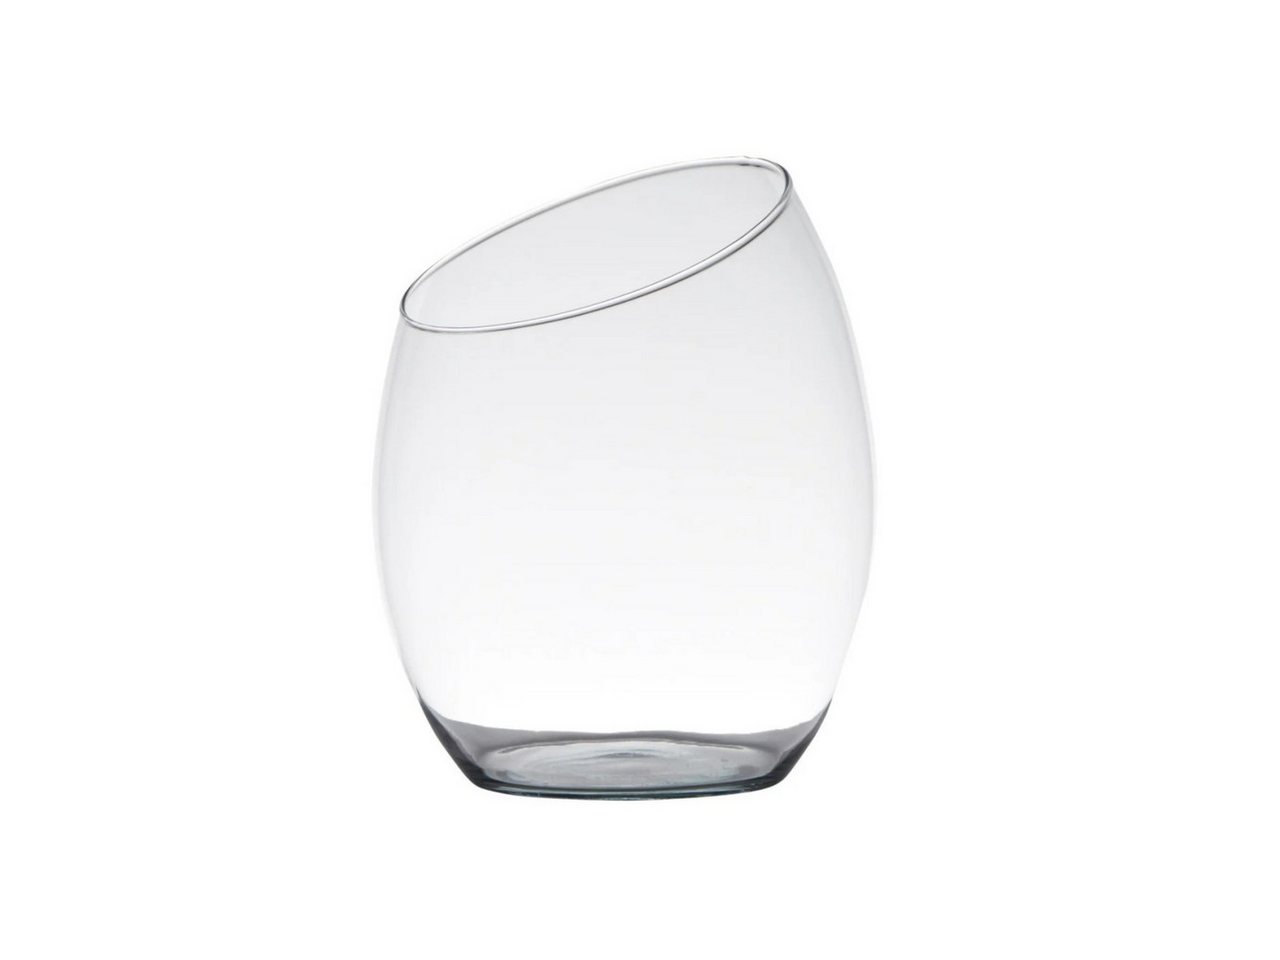 Hakbijl Glass Deko-Glas, Transparent H:25cm D:20cm Glas von Hakbijl Glass